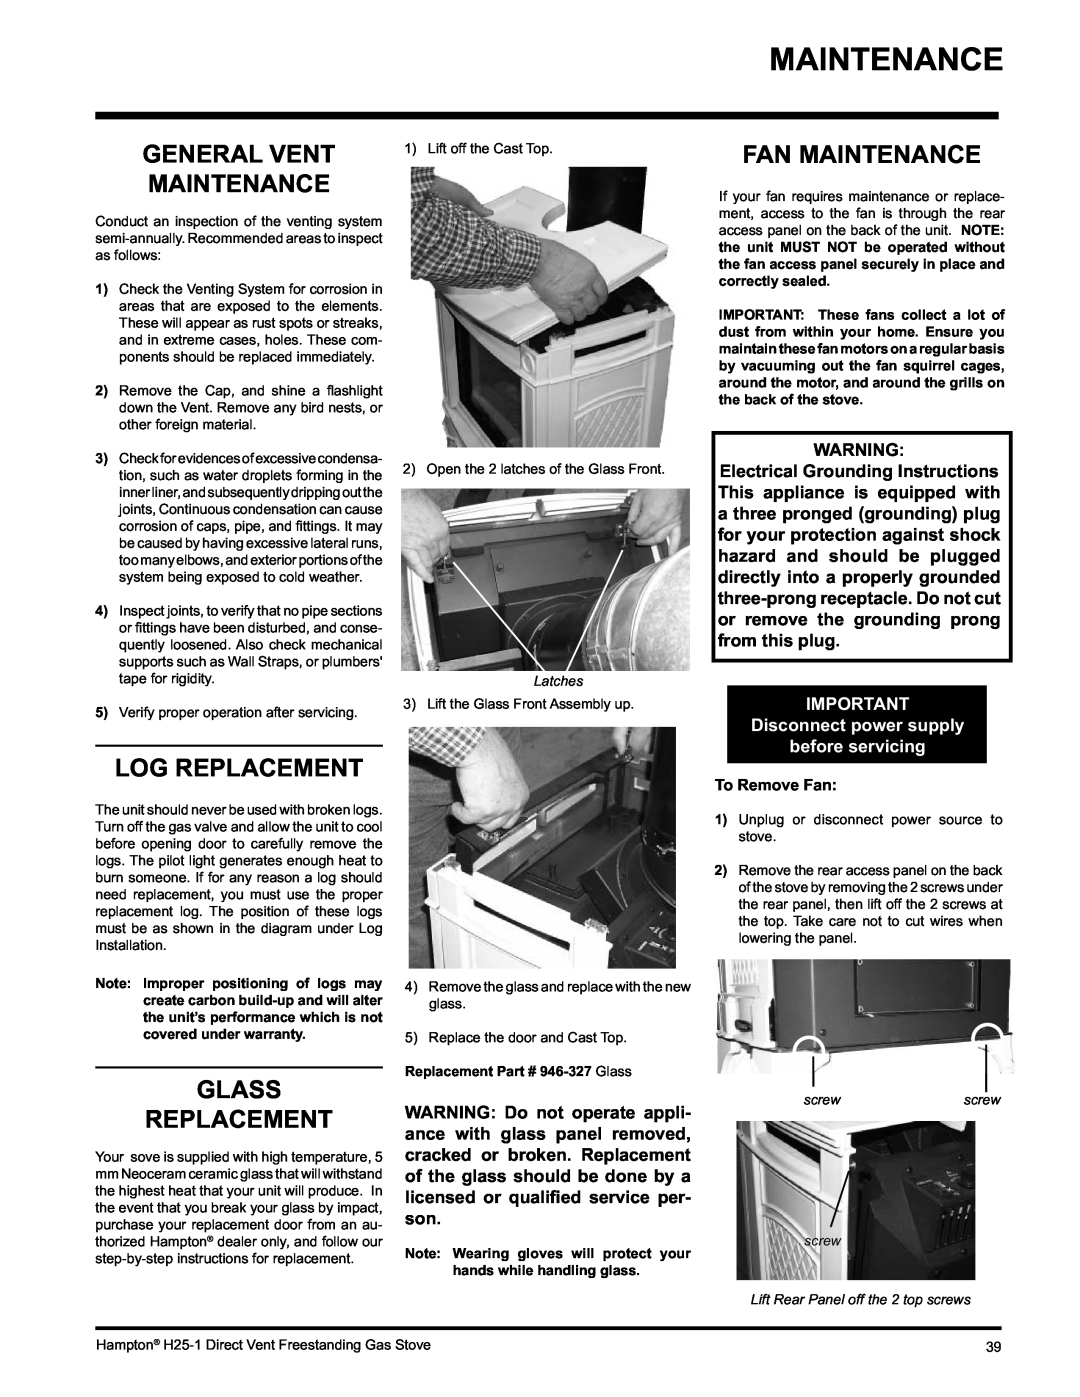 Hampton Direct H25-LP1, H25-NG1 installation manual Fan Maintenance, Log Replacement, Glass Replacement, General Vent 